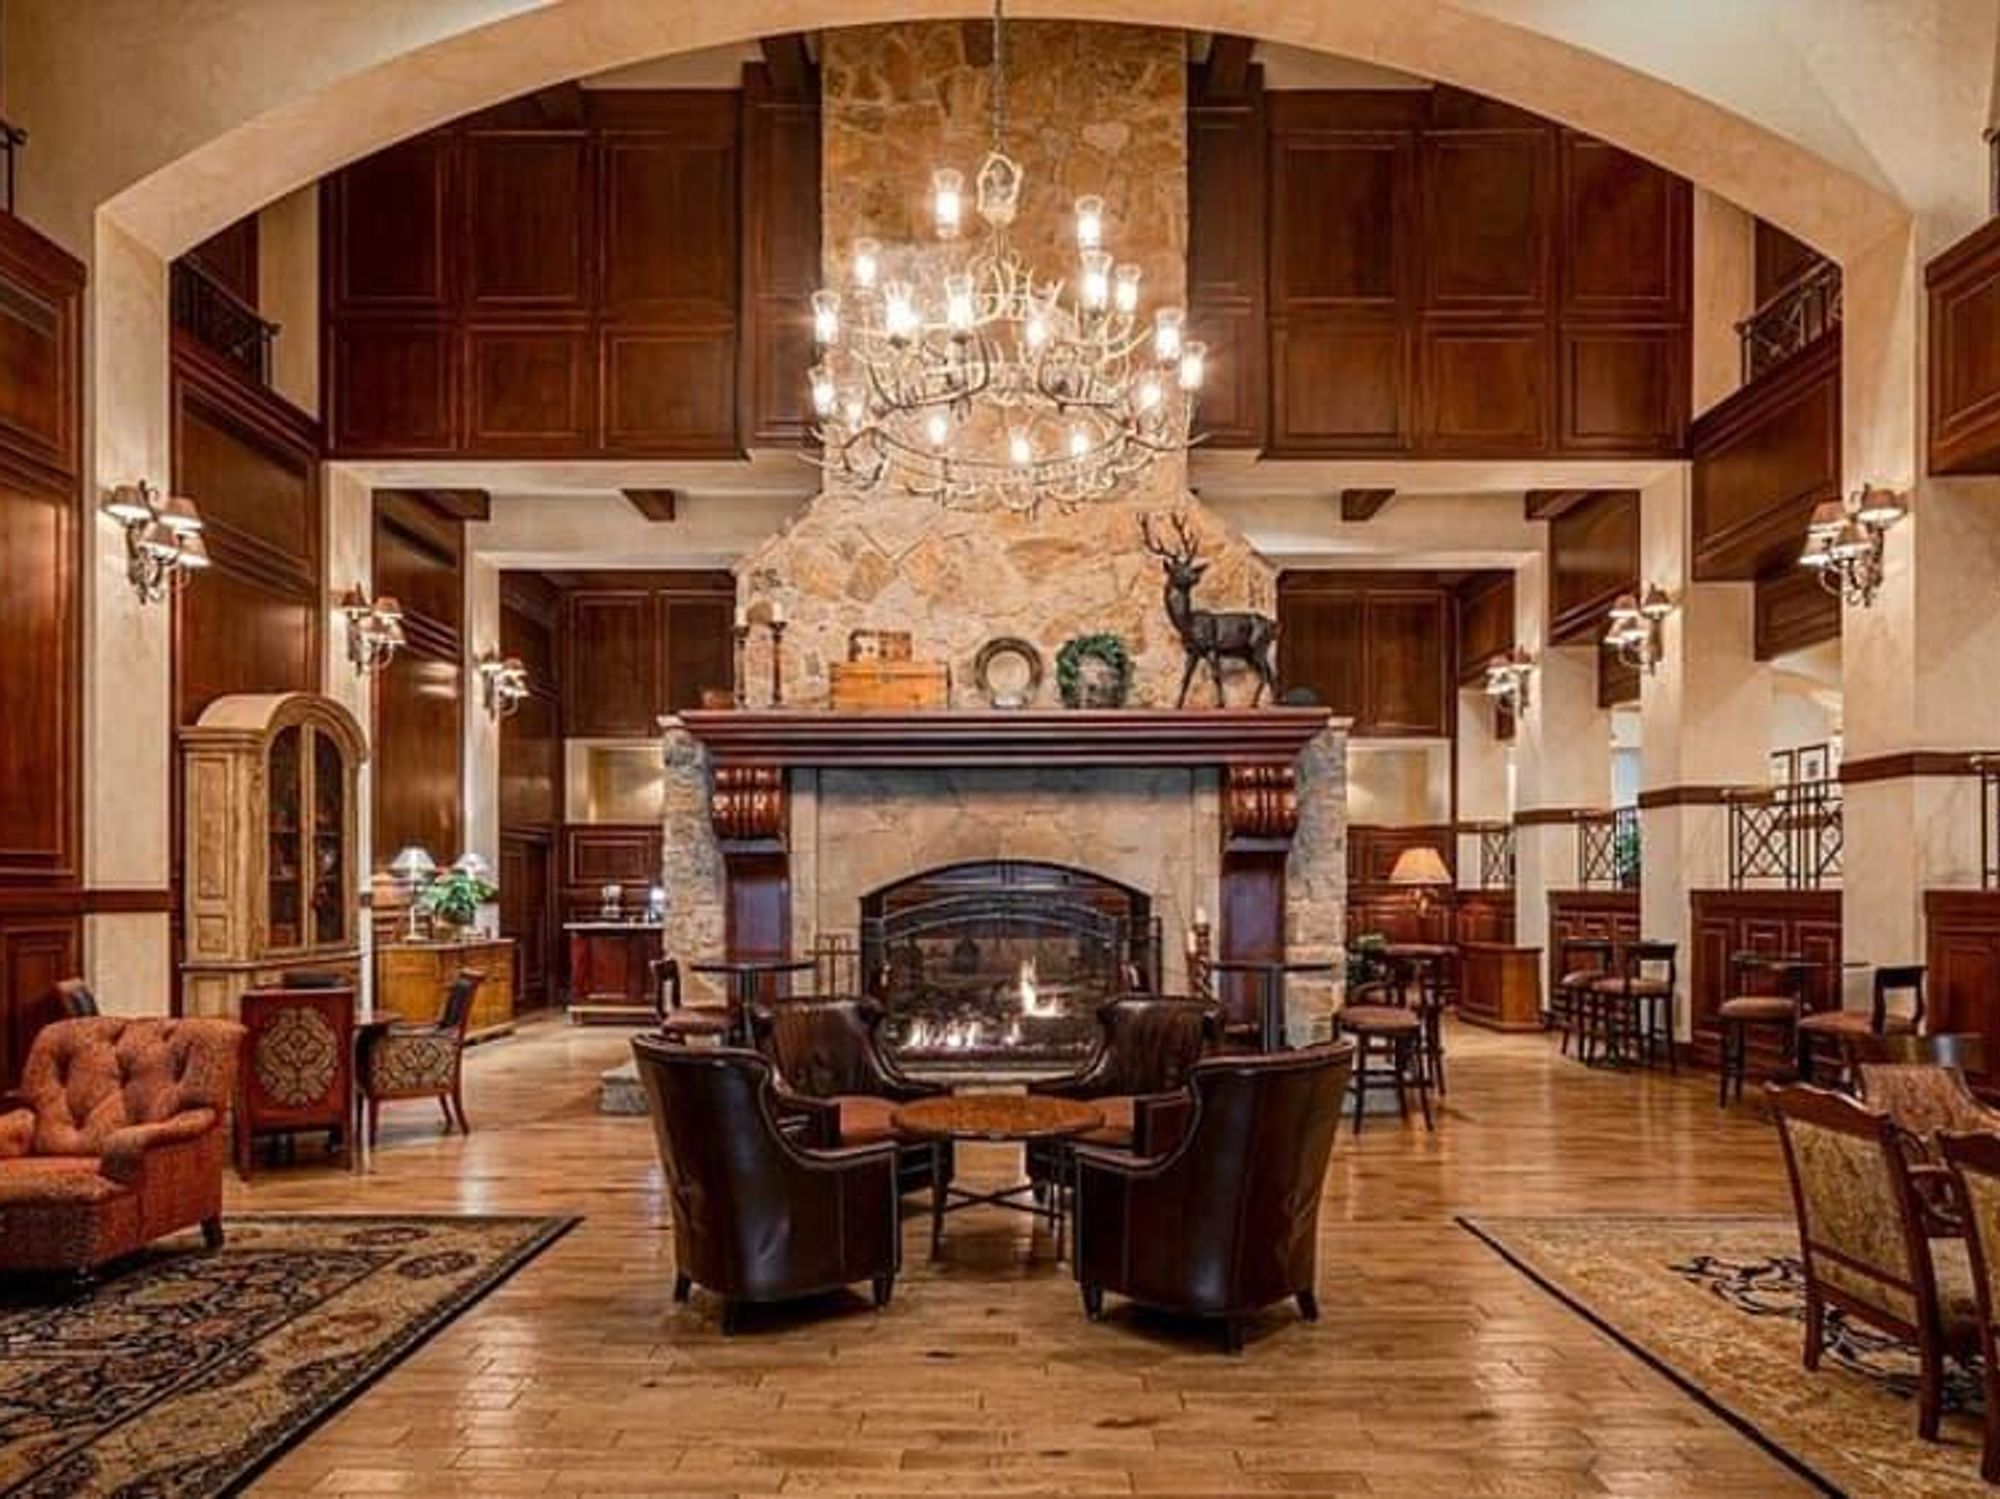 The Houstonian Hotel grand room